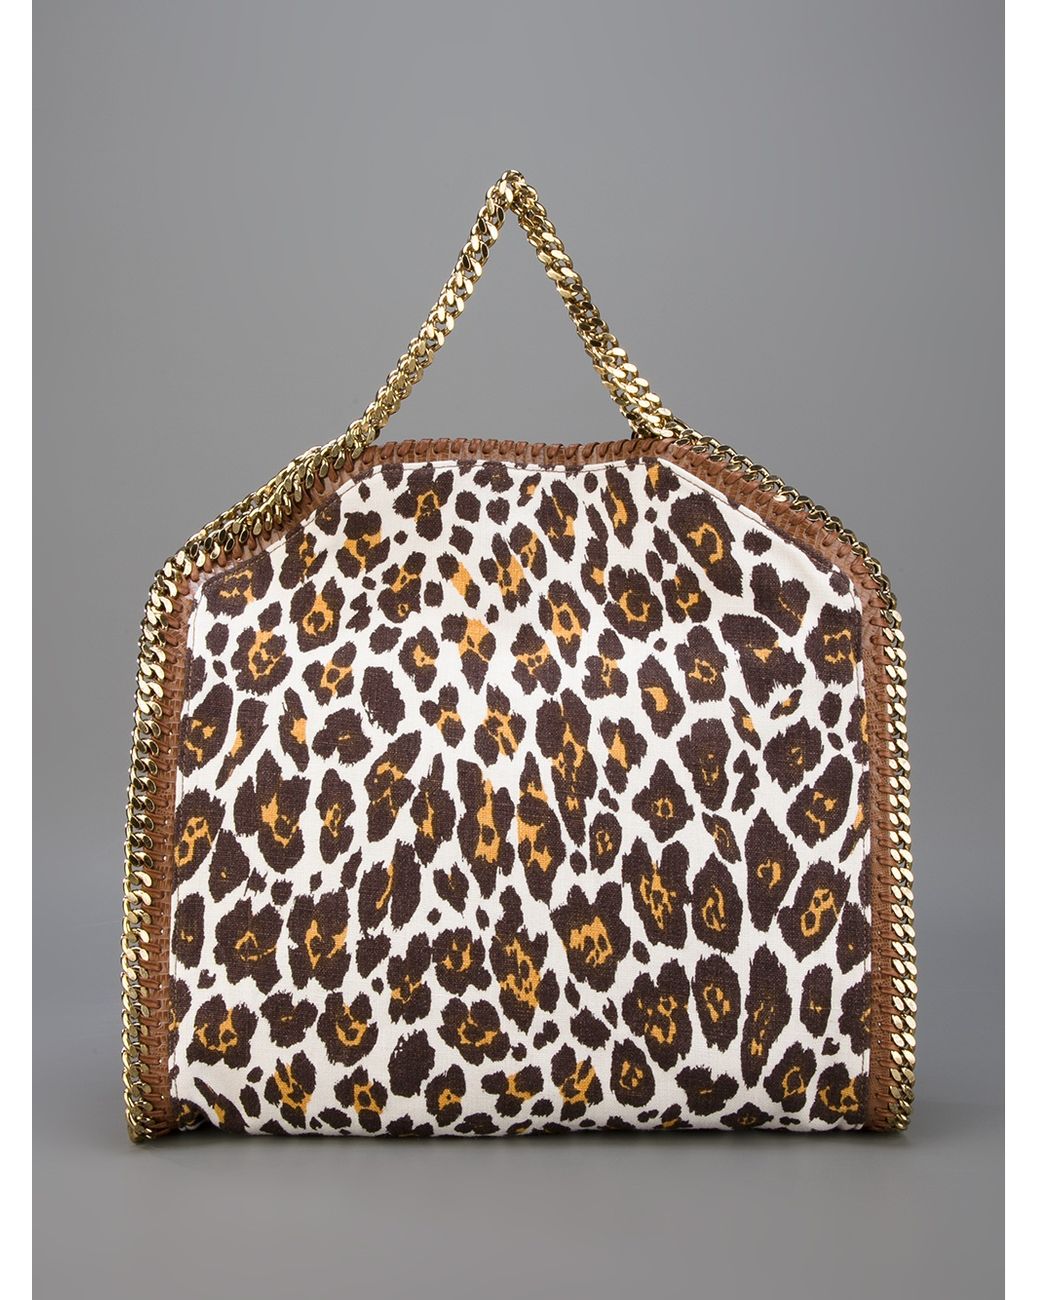 McCartney Women's Leopard Print Bag